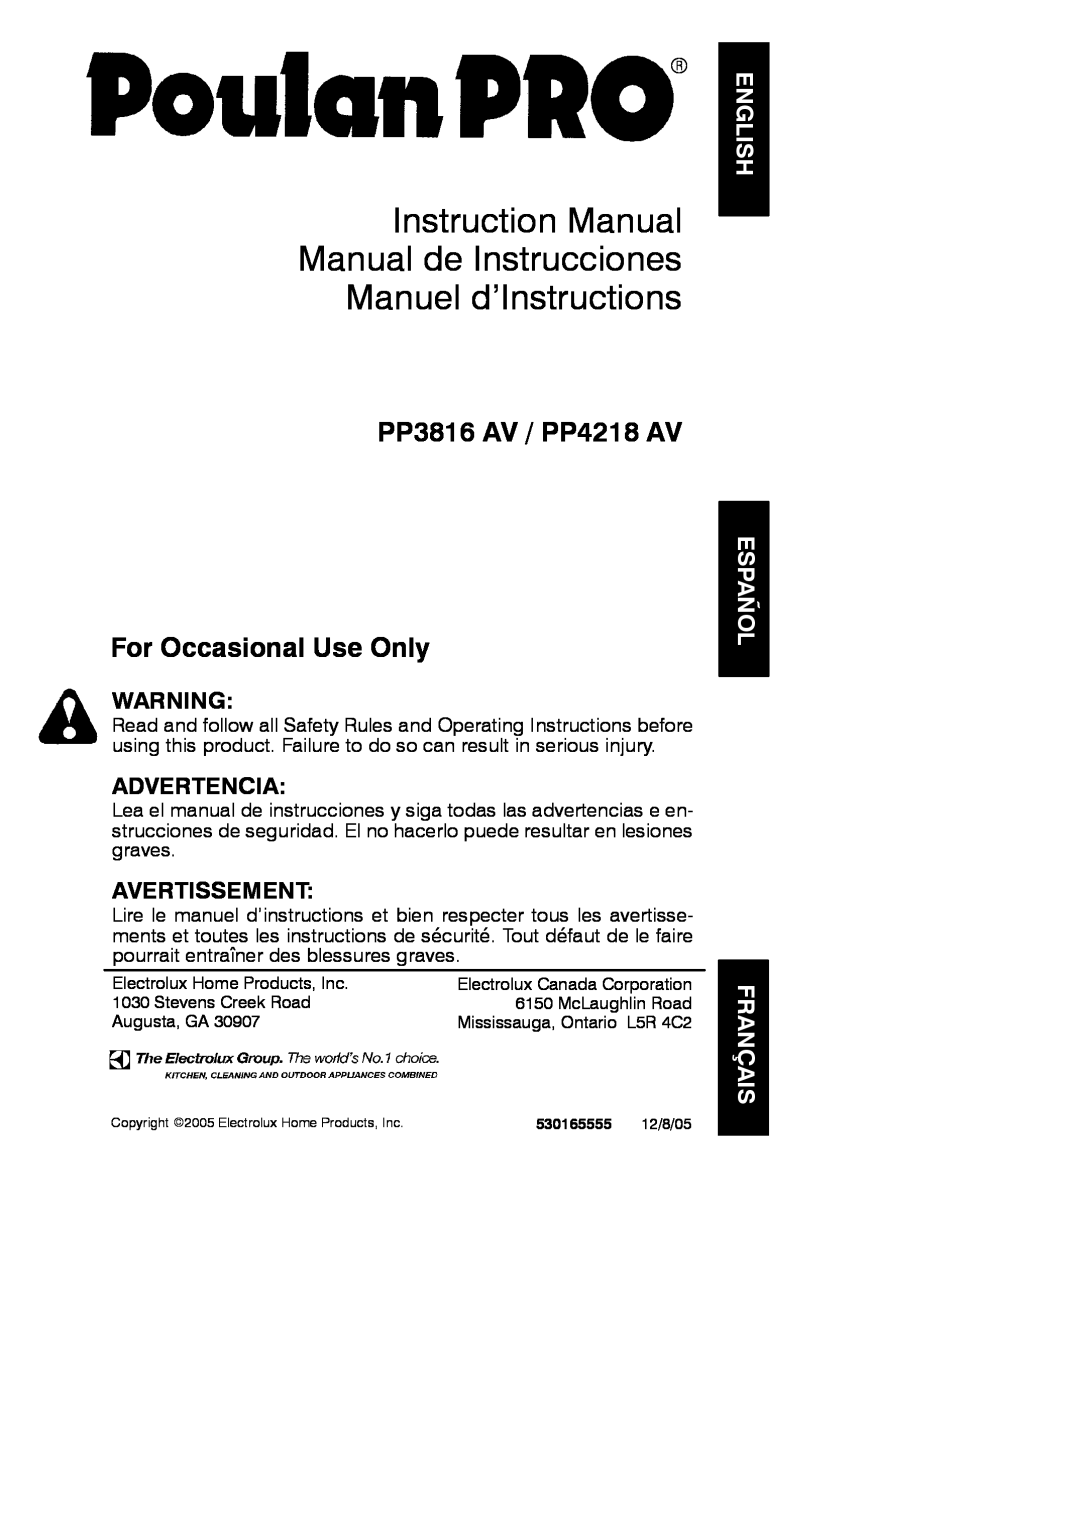 Poulan 530165555 instruction manual English, Español Français, PP3816 AV / PP4218 AV For Occasional Use Only, Advertencia 